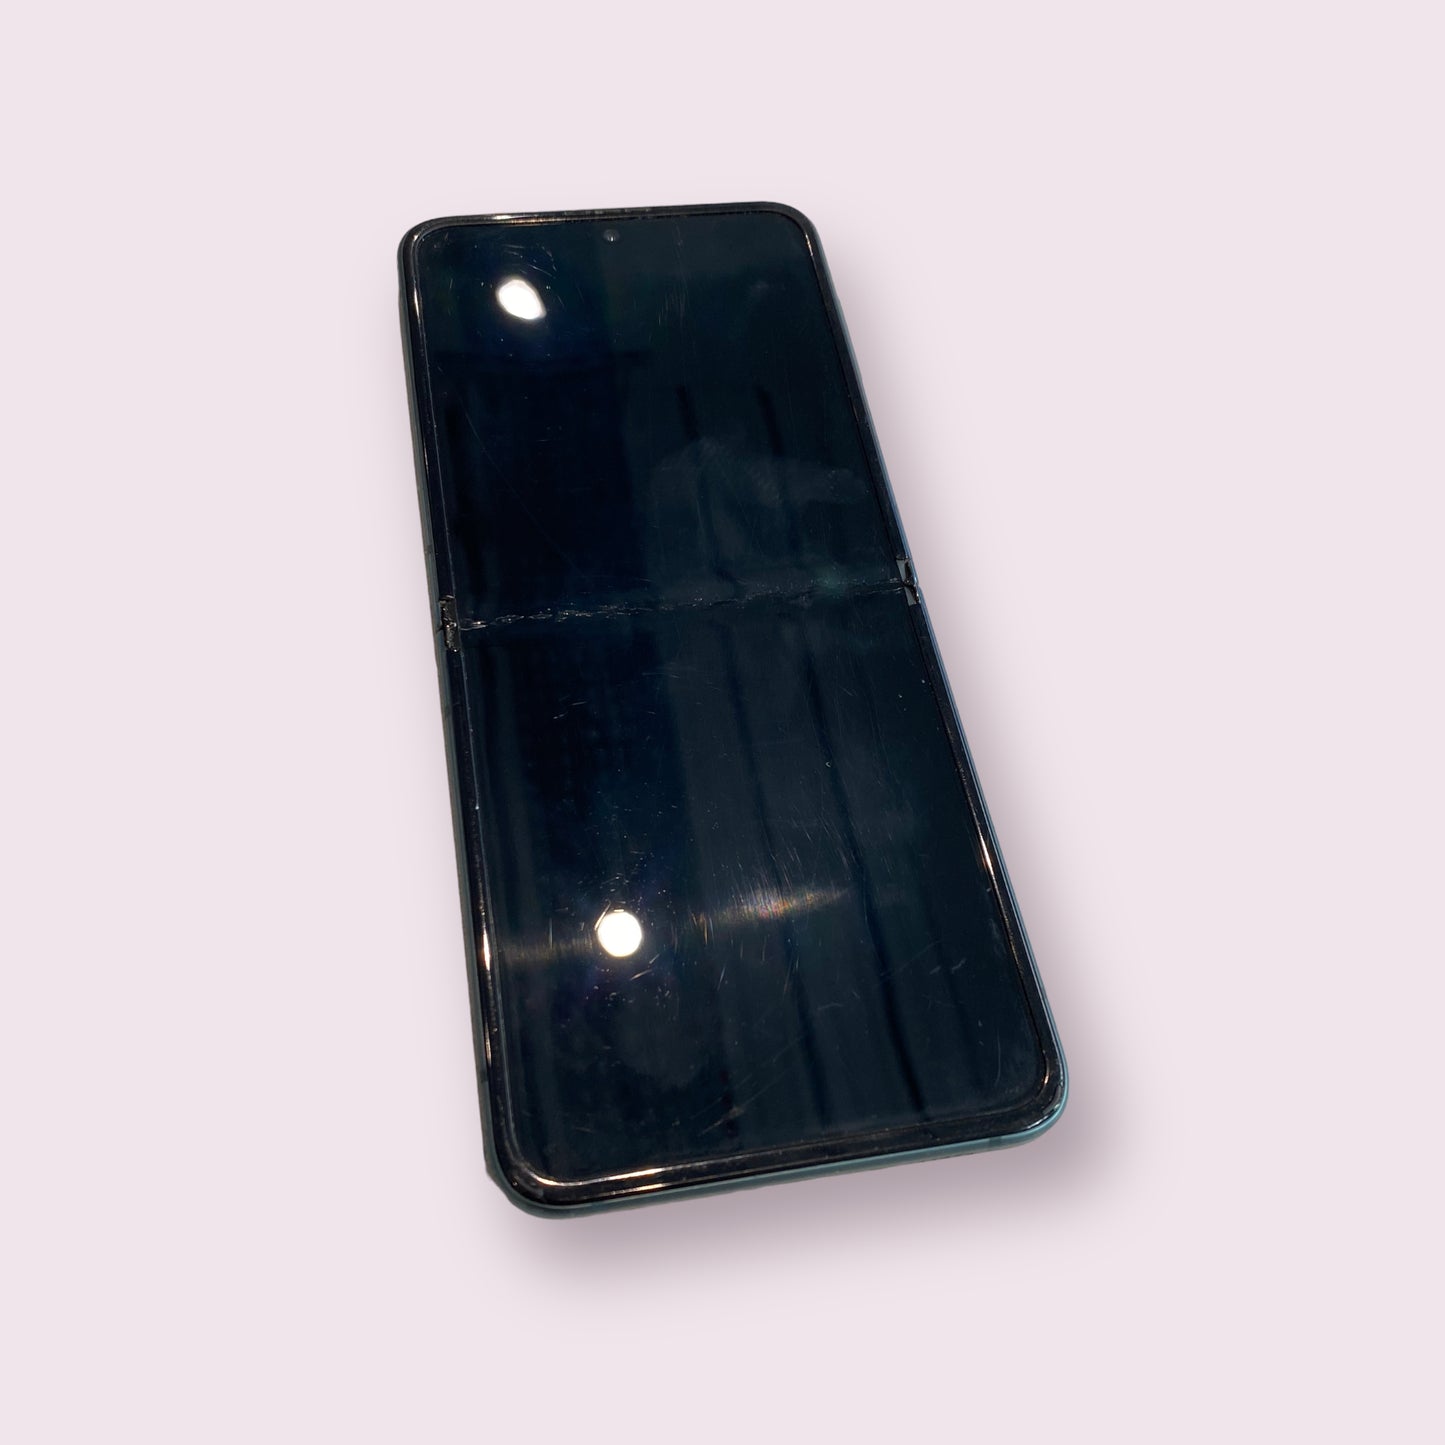 Samsung Galaxy Z Flip 3 5G 128GB Dual Sim Grey Smartphone - Unlocked - Grade C